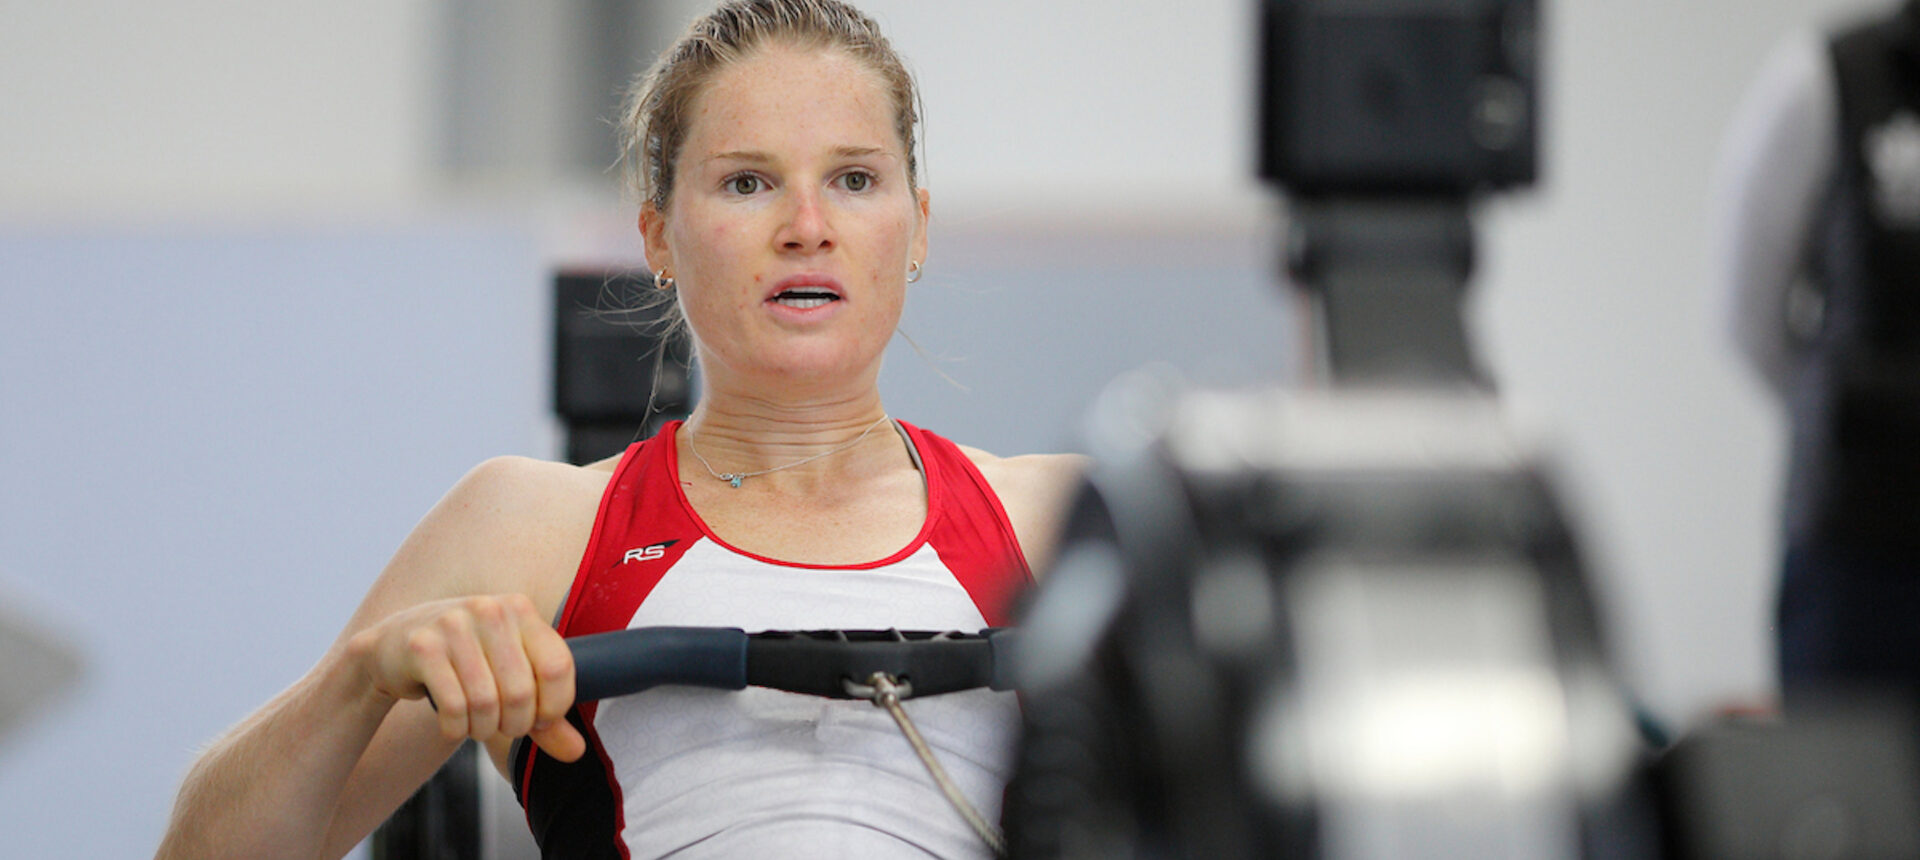 New dates set for Canadian Indoor Rowing Challenge